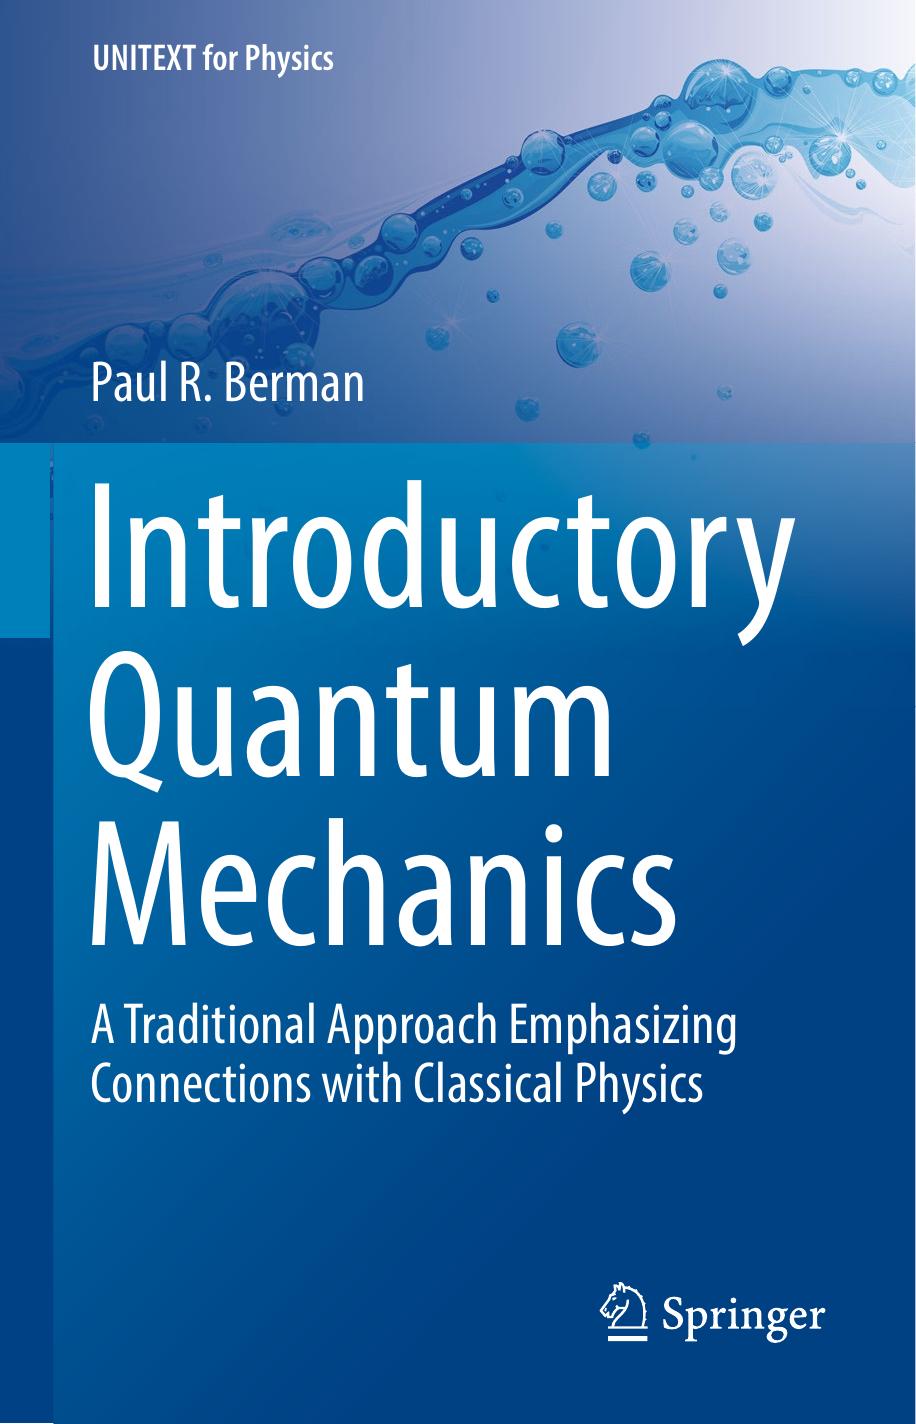 Introductory Quantum Mechanics  A Traditional Approach Emphasizing 2018( PDFDrive.com )